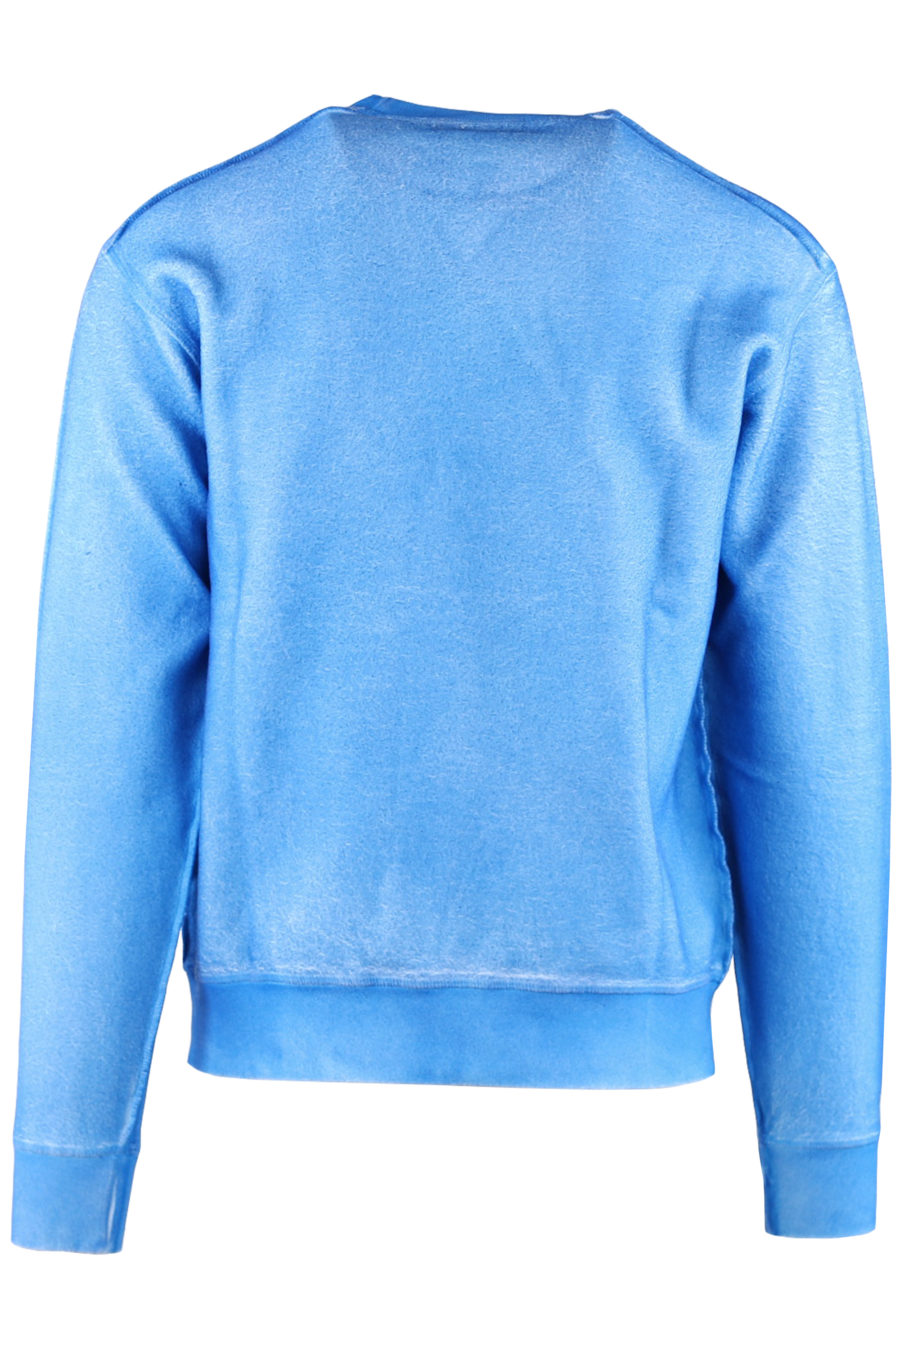 Blaues Fleece-Sweatshirt mit weißem Logo - 01a70e81438238f68d97a6ac4e90831a6f35f614